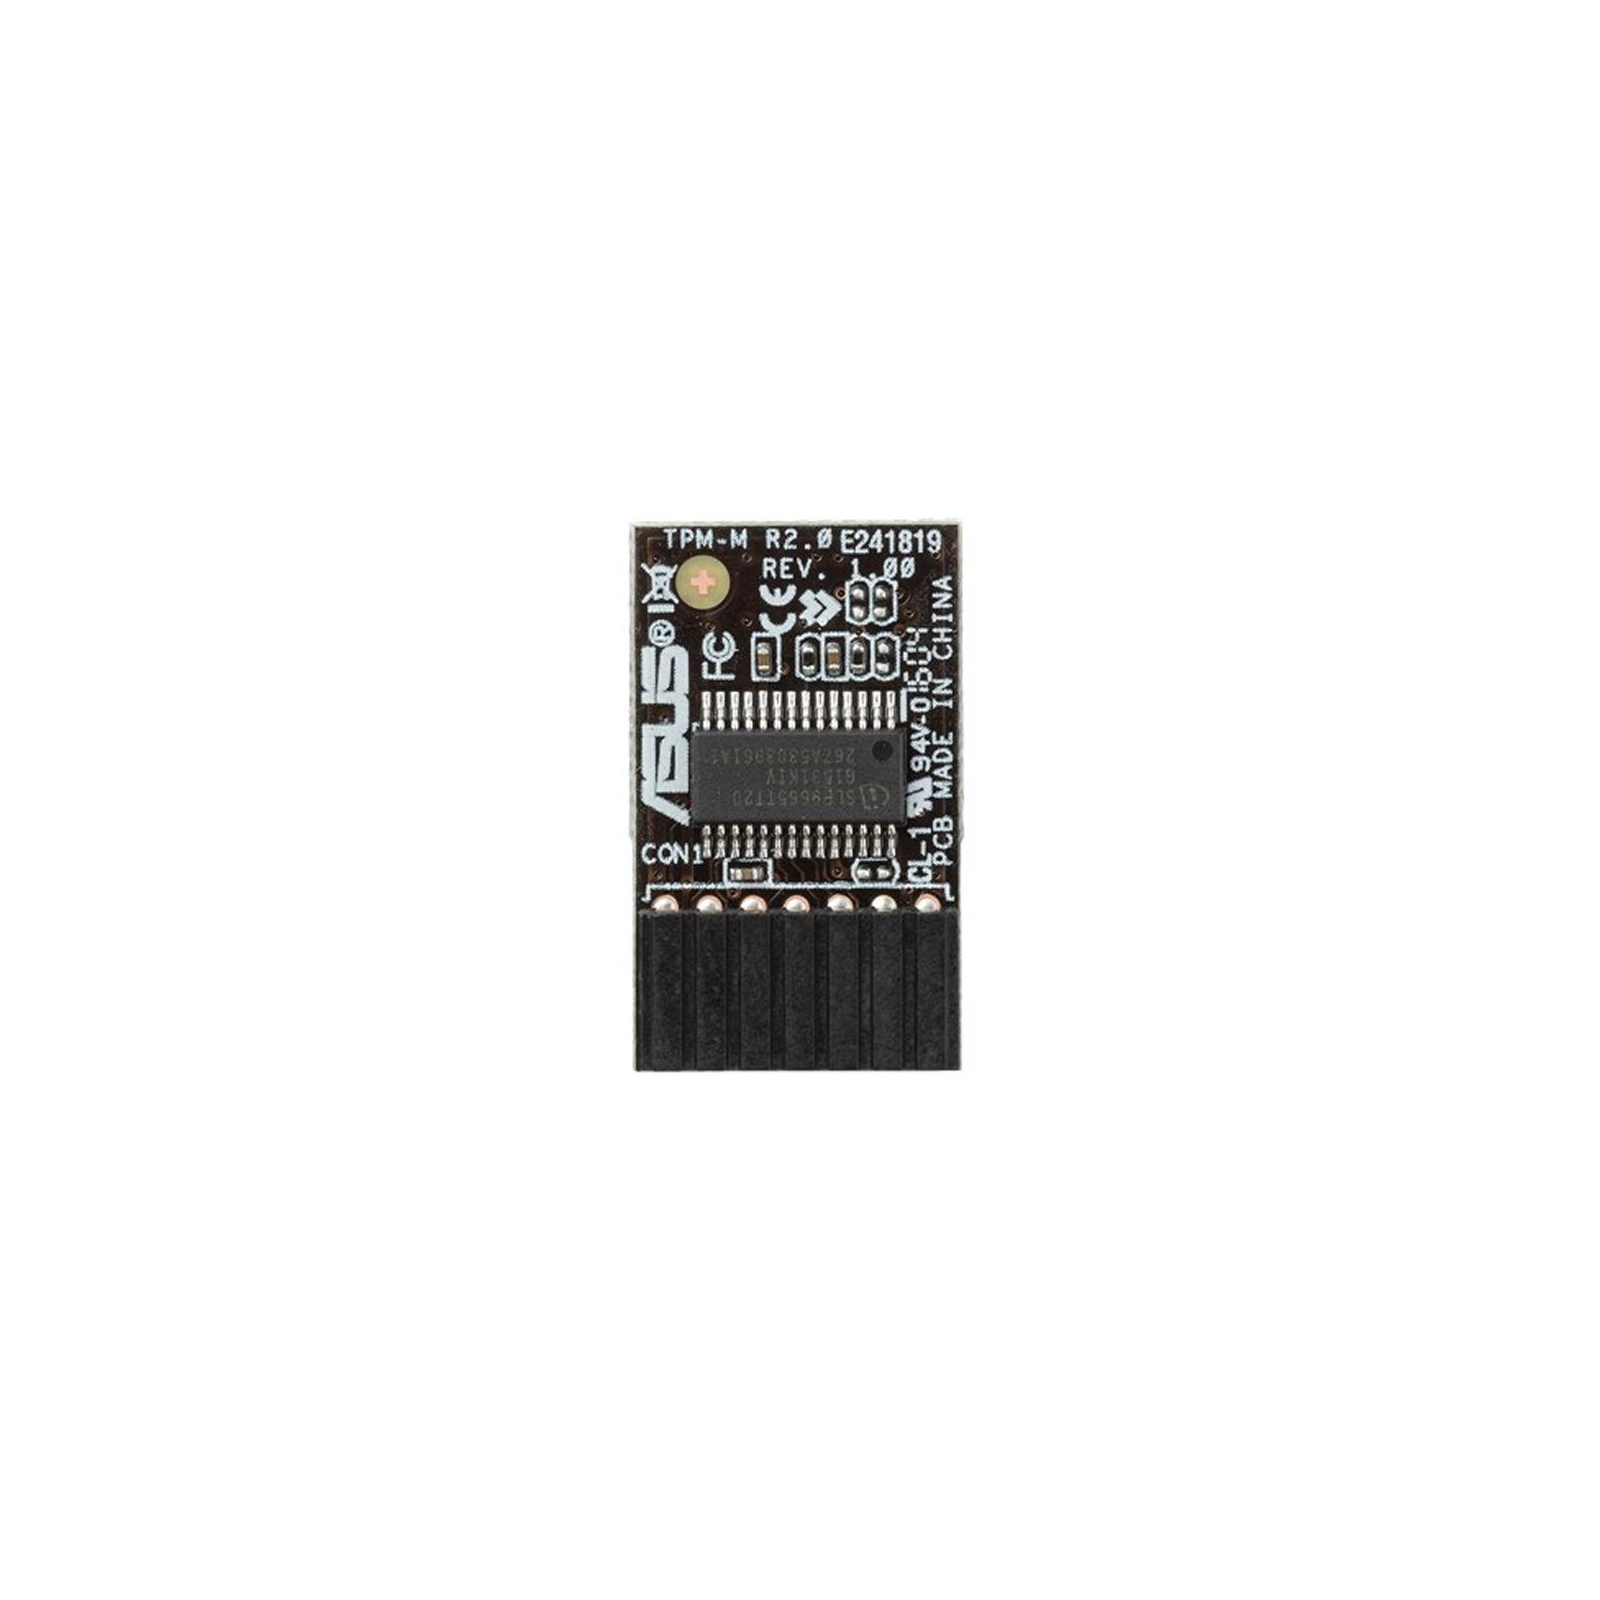 Контроллер ASUS TPM-M-R2.0 14-1pin LPC (TPM-M R2.0) изображение 2